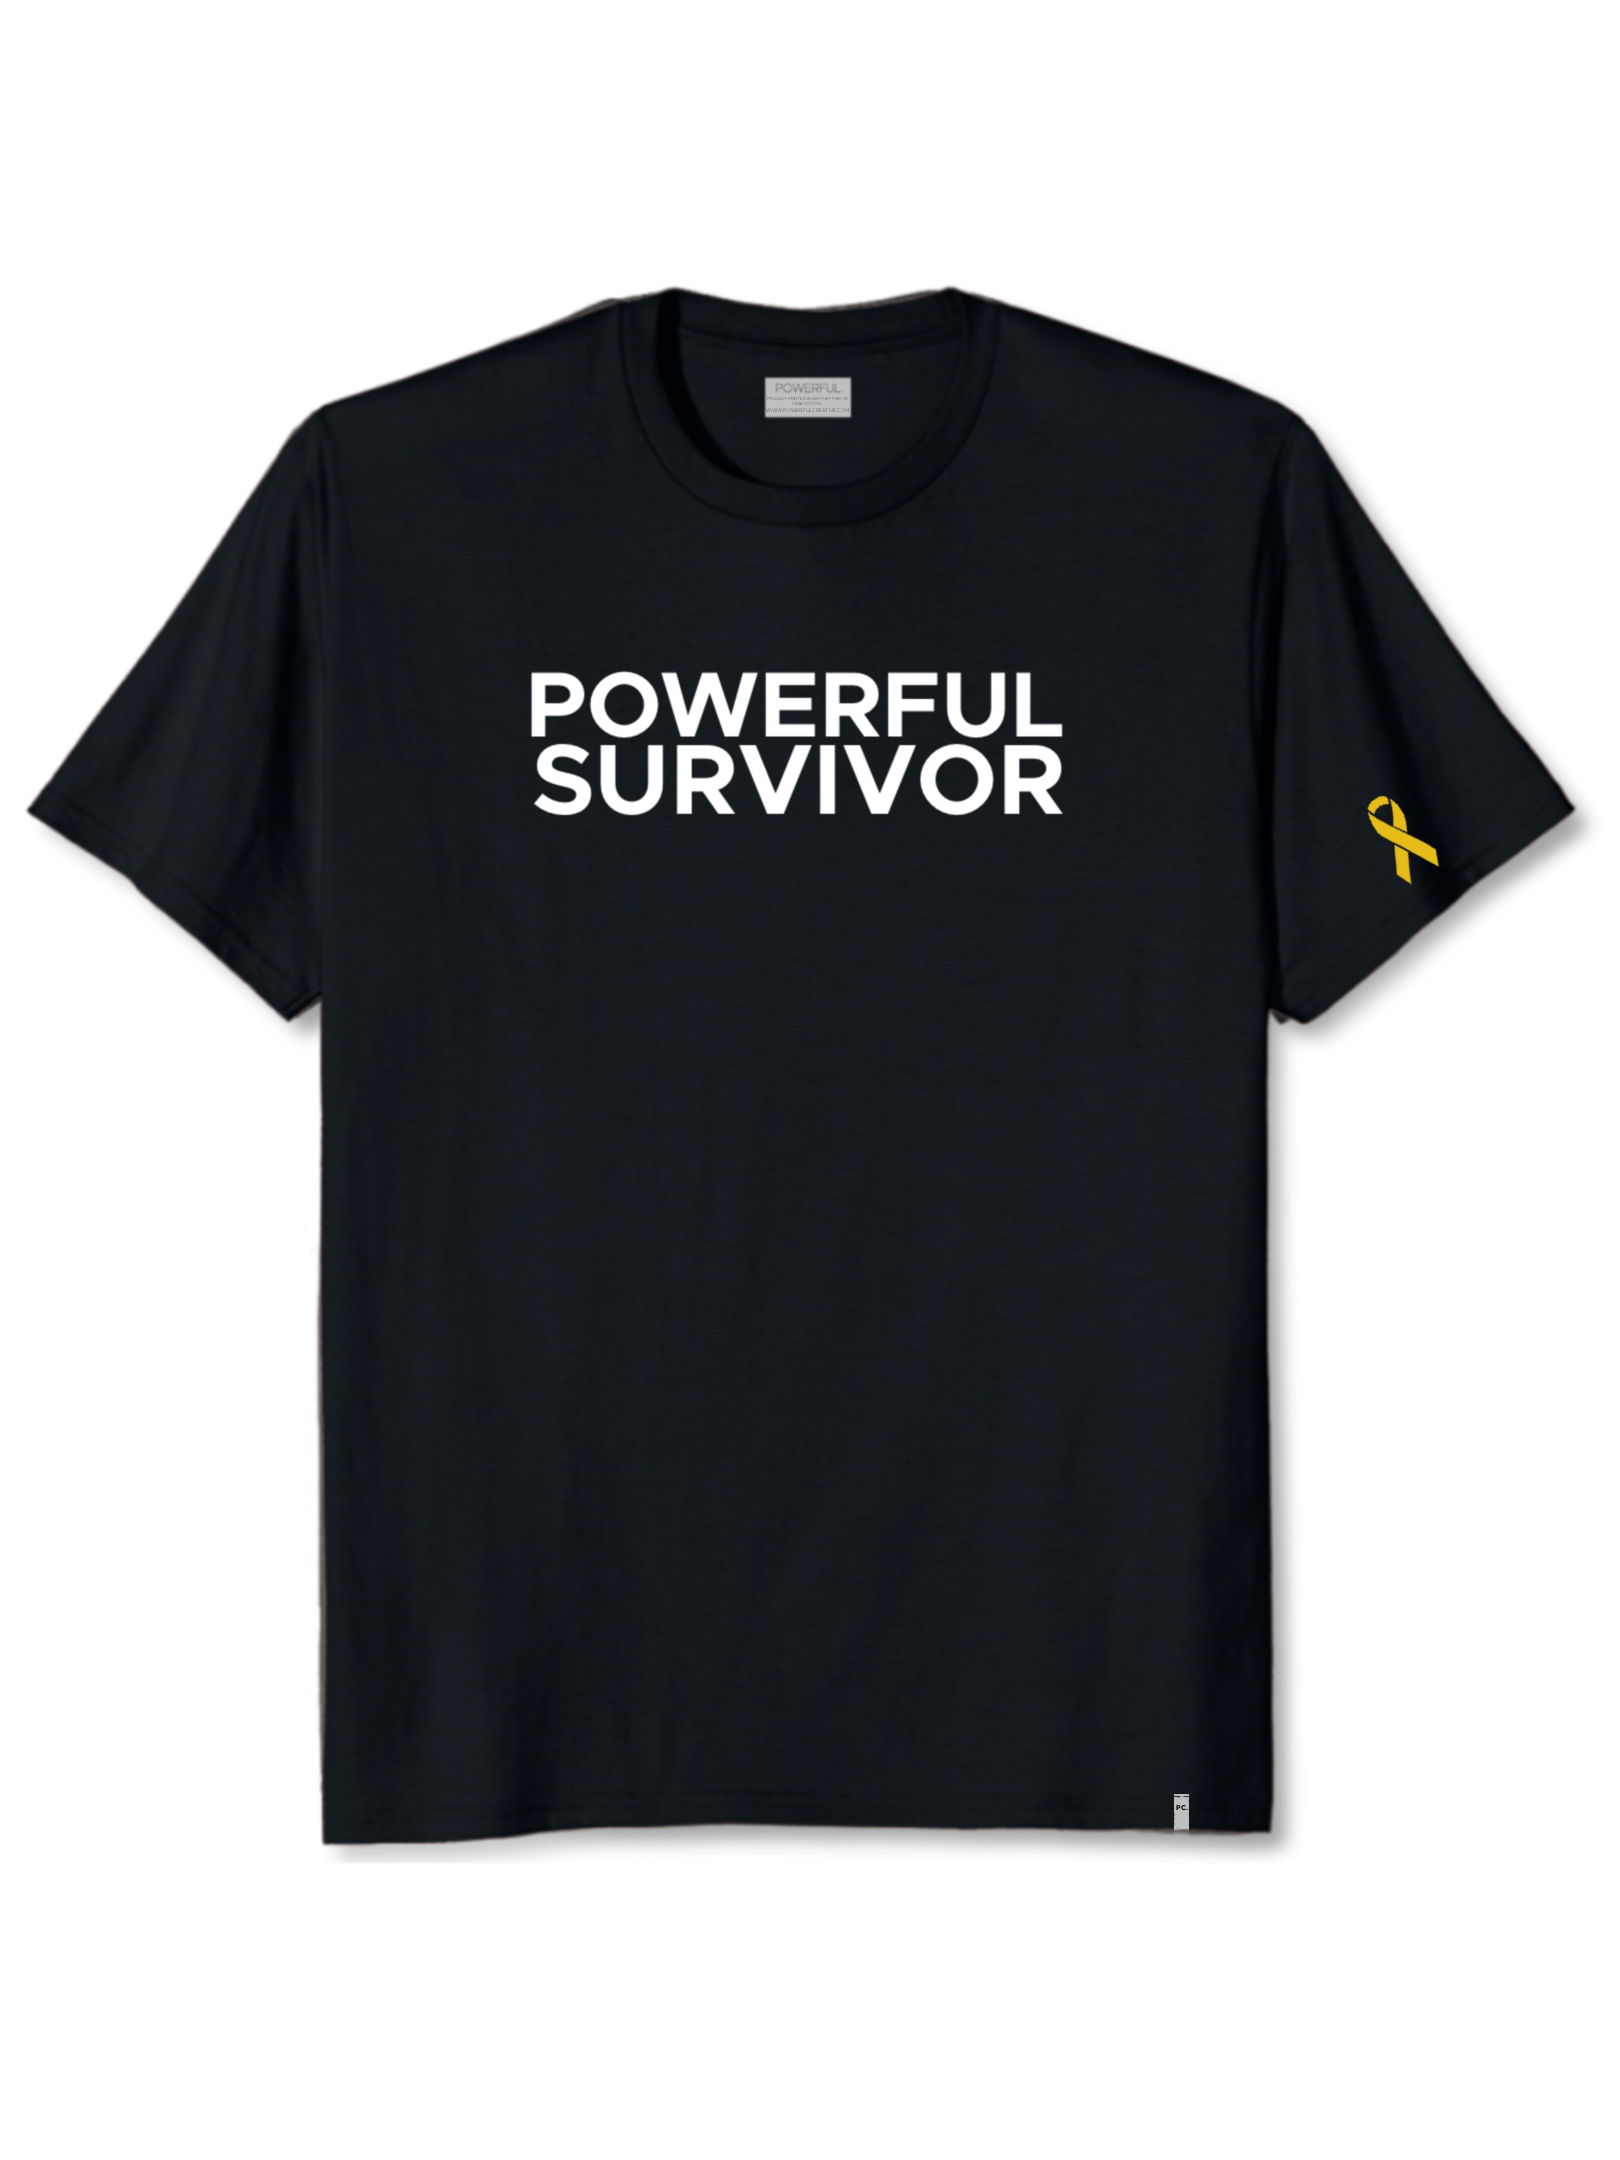 Powerful Survivor Tshirt